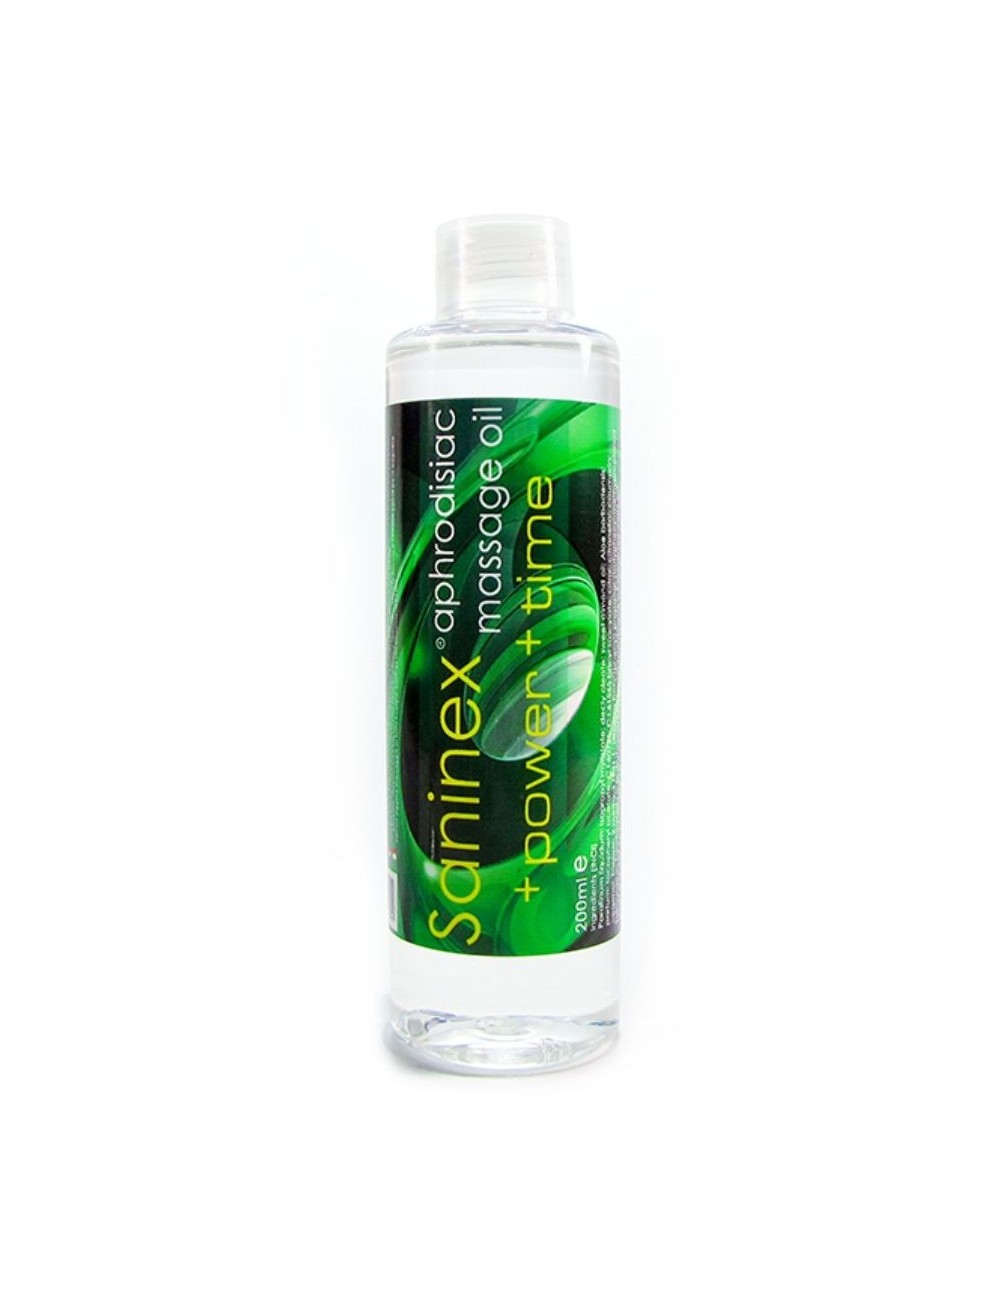 HUILE APHRODISIAQUE SANINEX POWER TIME 200 ML - Aphrodisiaques - Saninex Oils/lubes